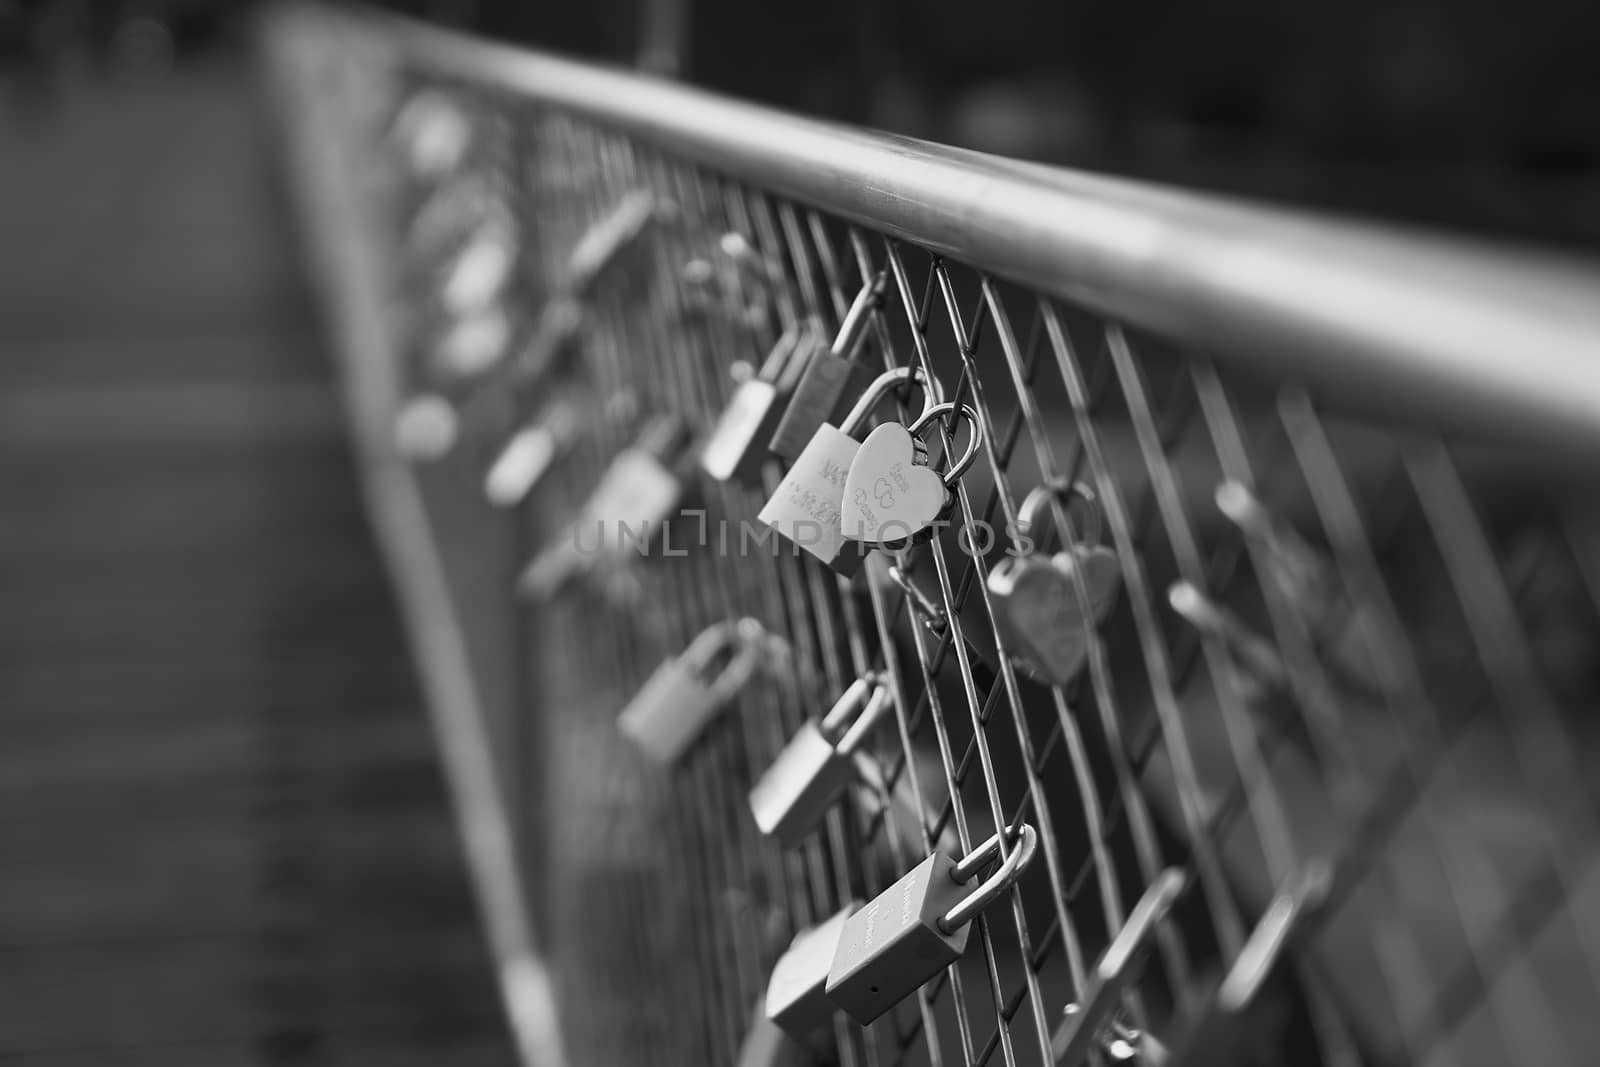 Heart shaped padlock on bridge in Munich by Sirius3001